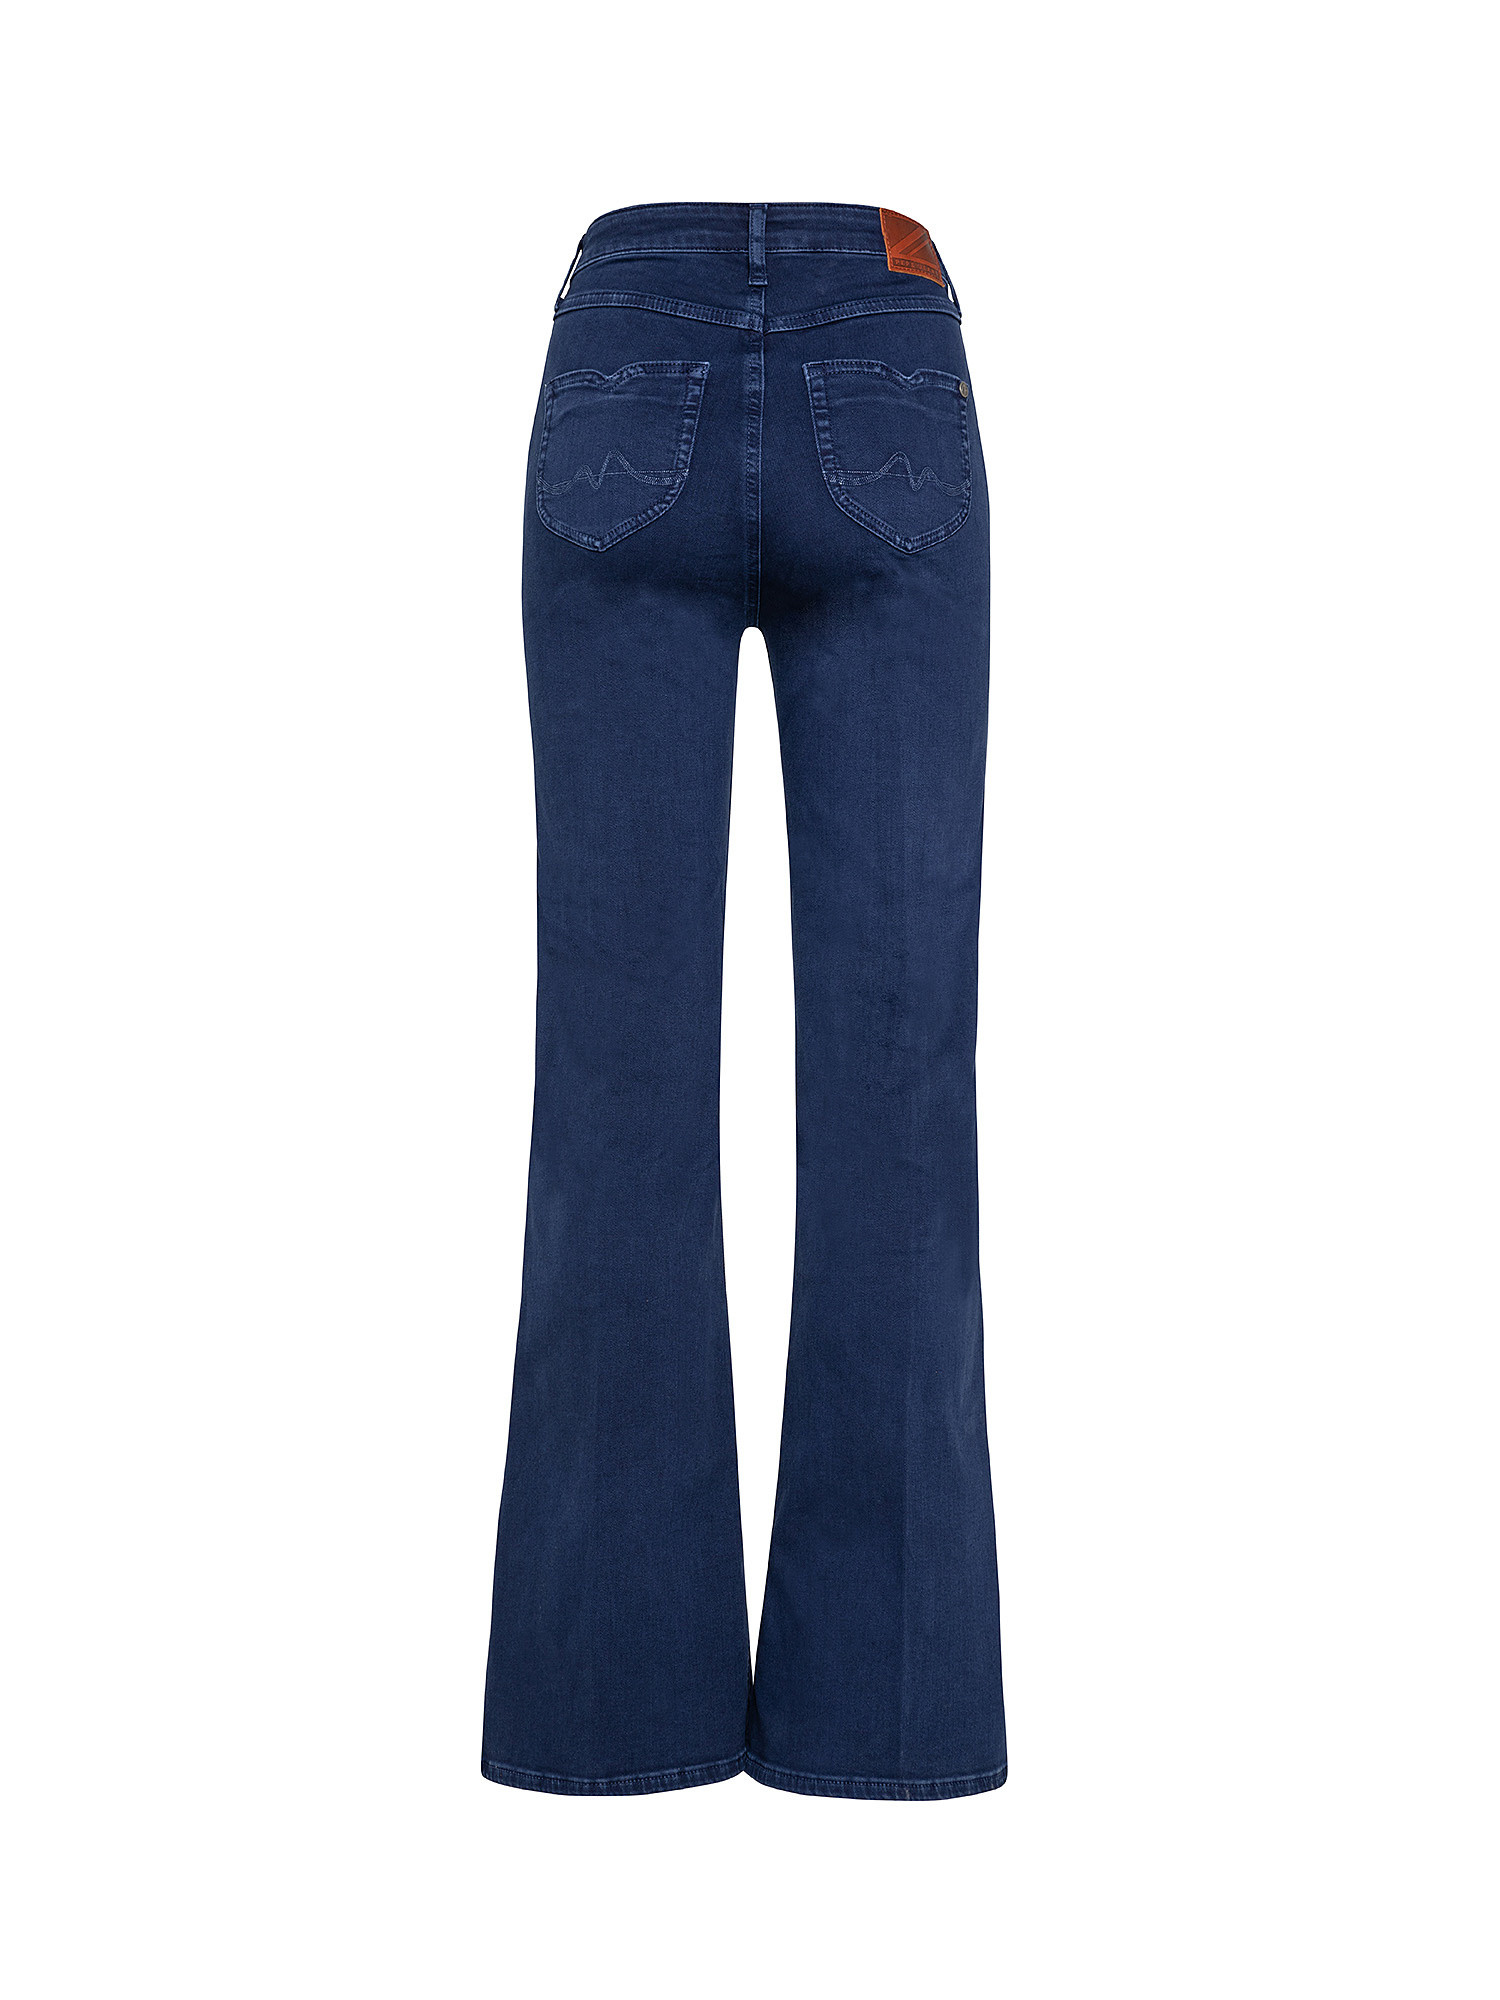 Jeans Willa cinque tasche, Blu scuro, large image number 1